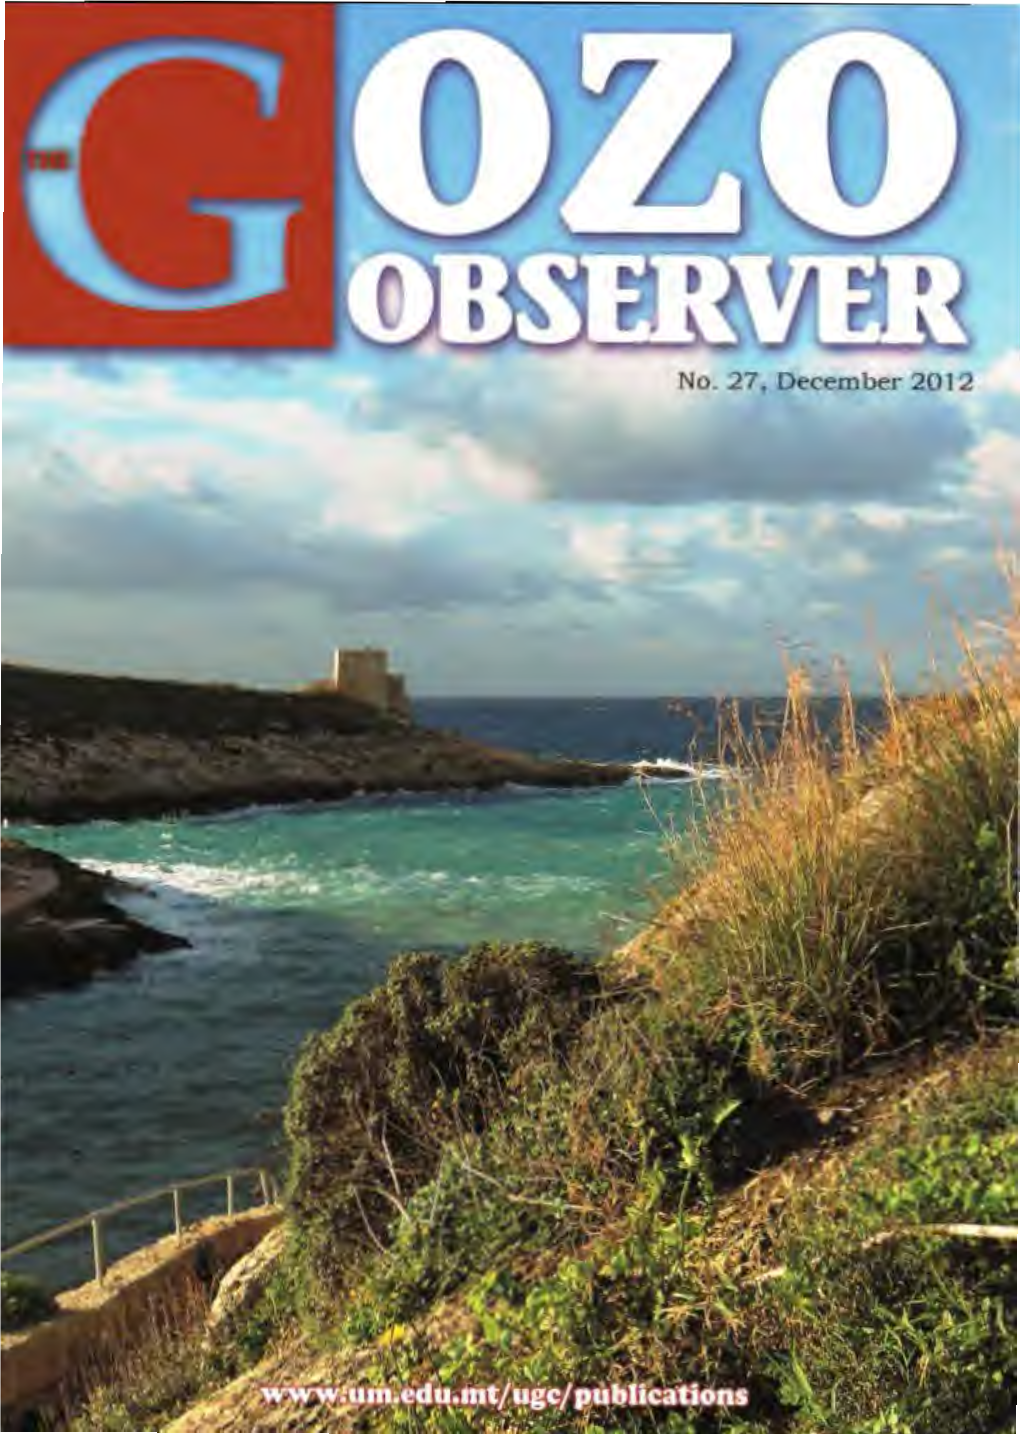 The Gozo Observer